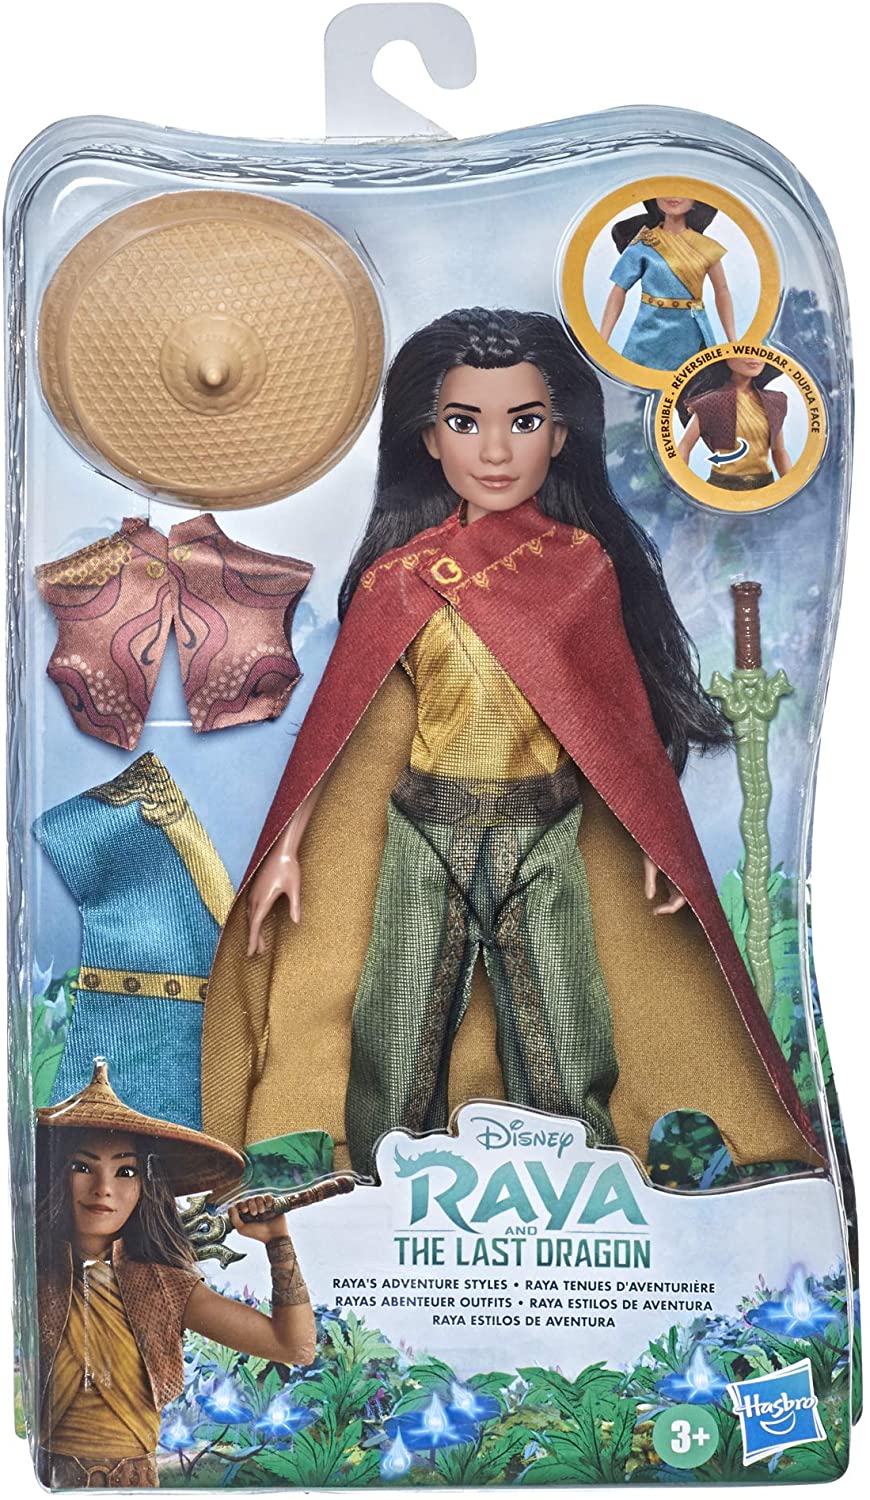 Disney Raya and The Last Dragon Raya's Adventure Styles doll